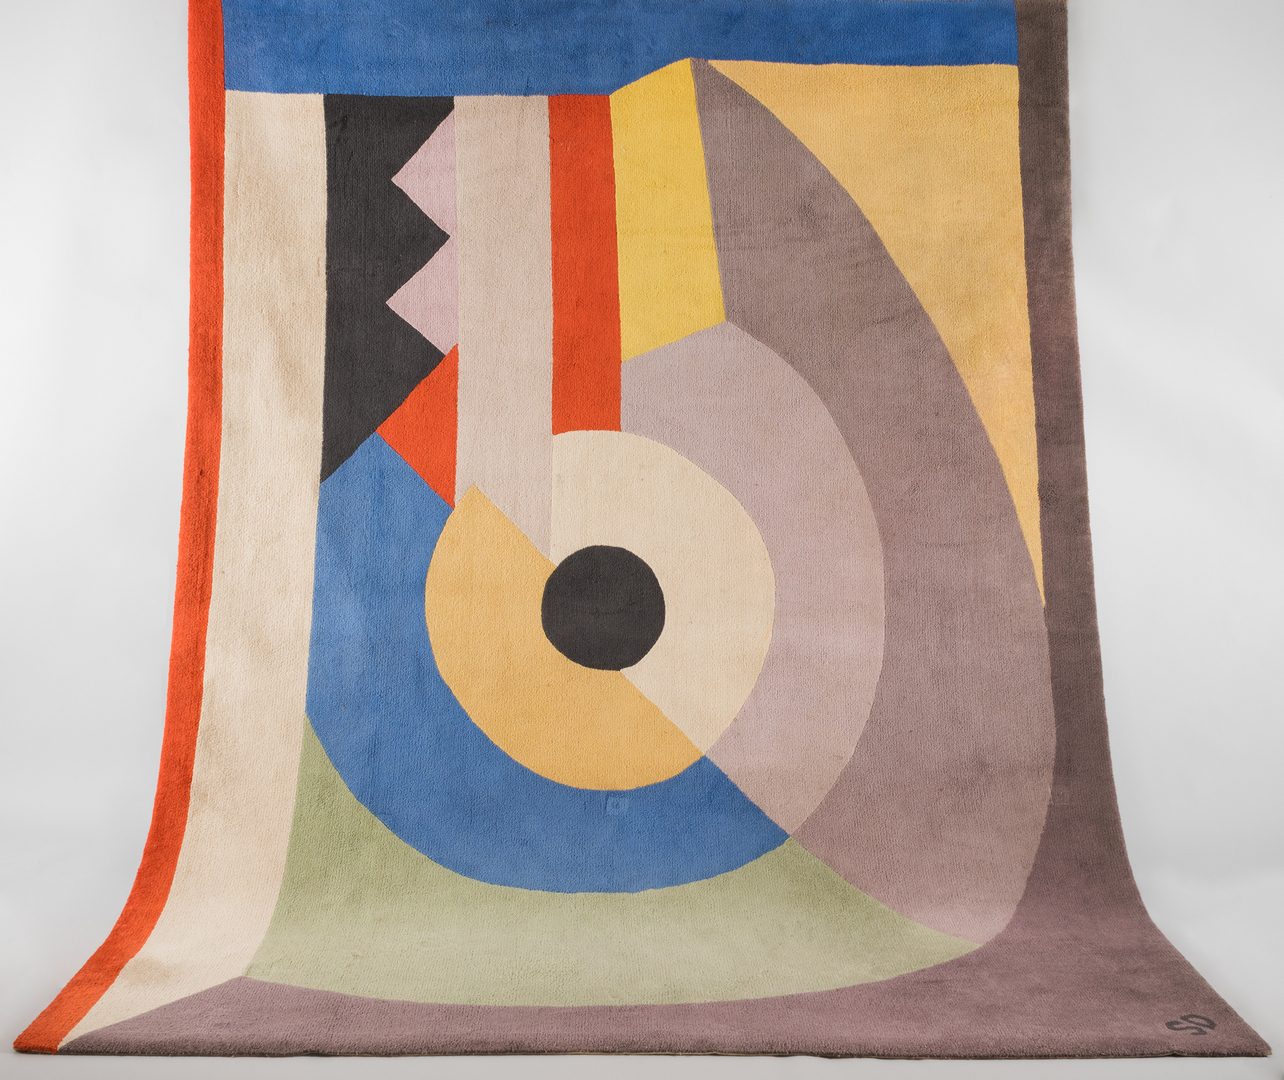 Lot 402: Sonia Delaunay carpet, "Pierrot Lunaire" 52/100